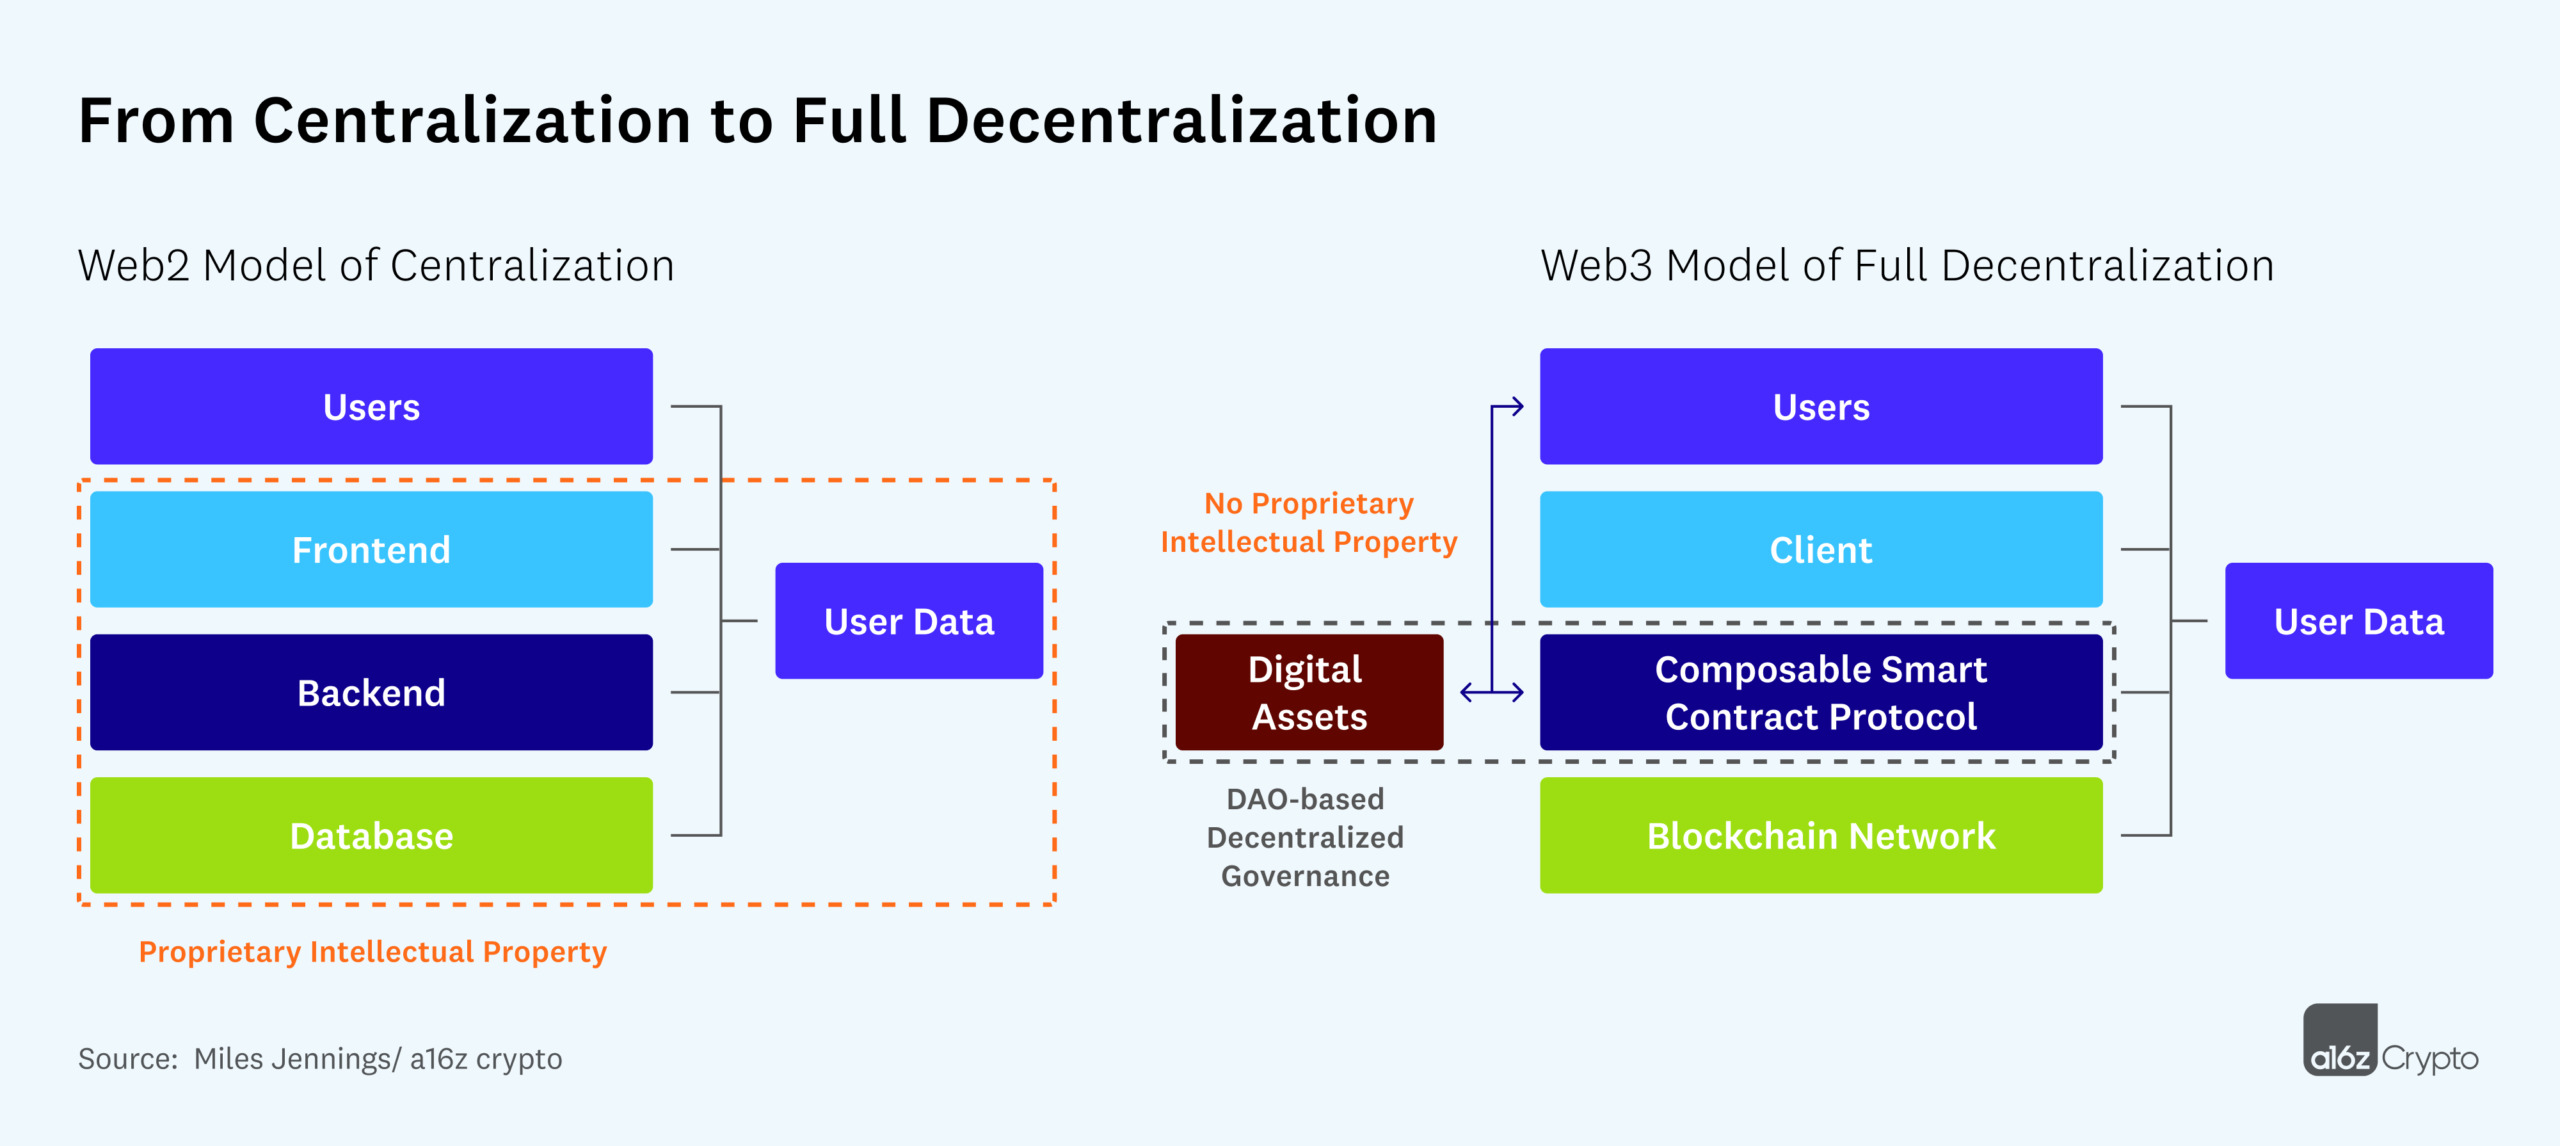 from web2 centralization to web3 full decentralization model